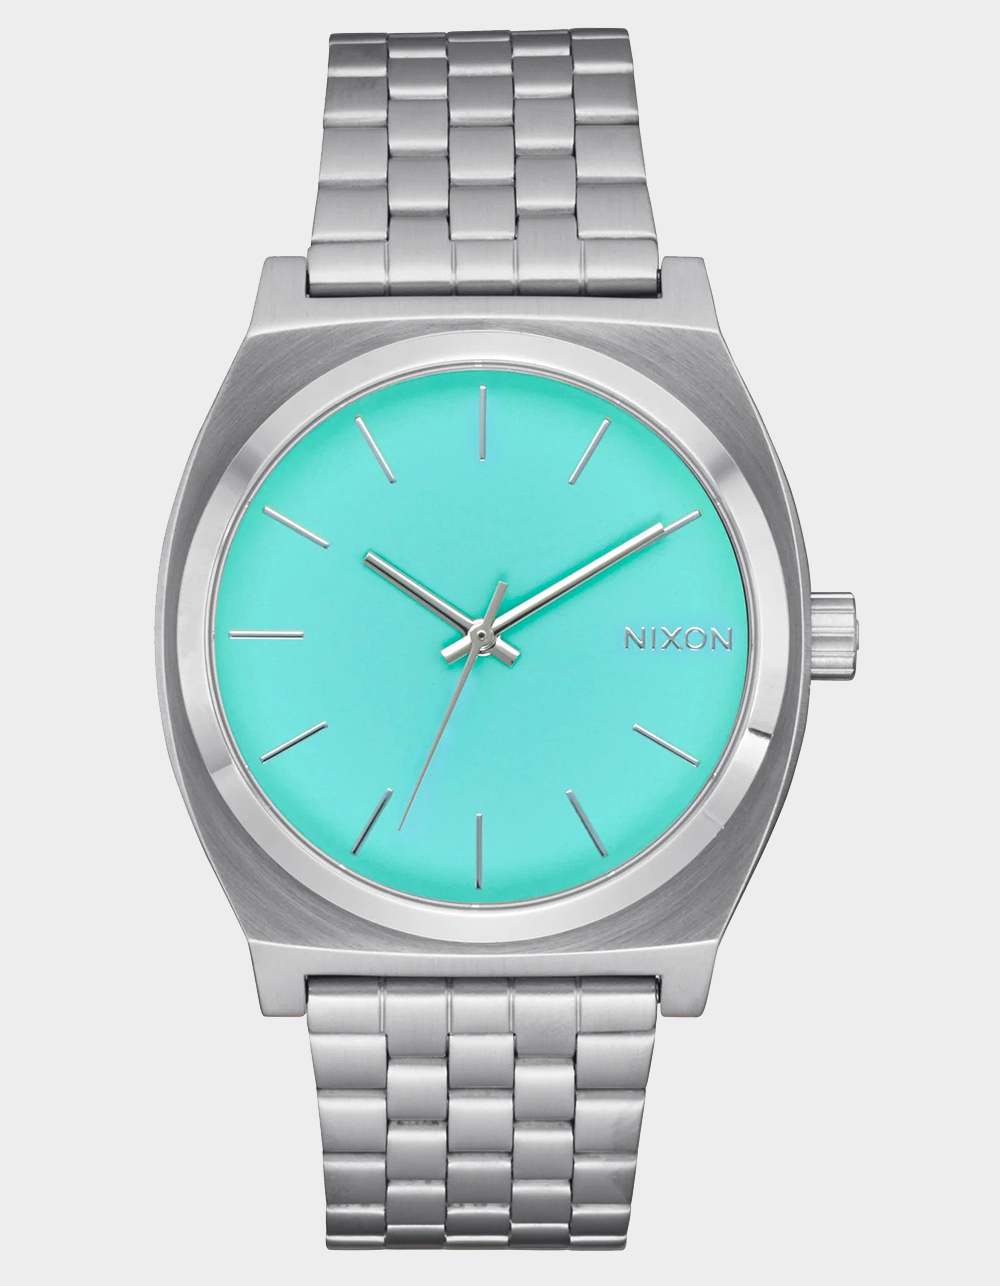 NIXON Time Teller Watch